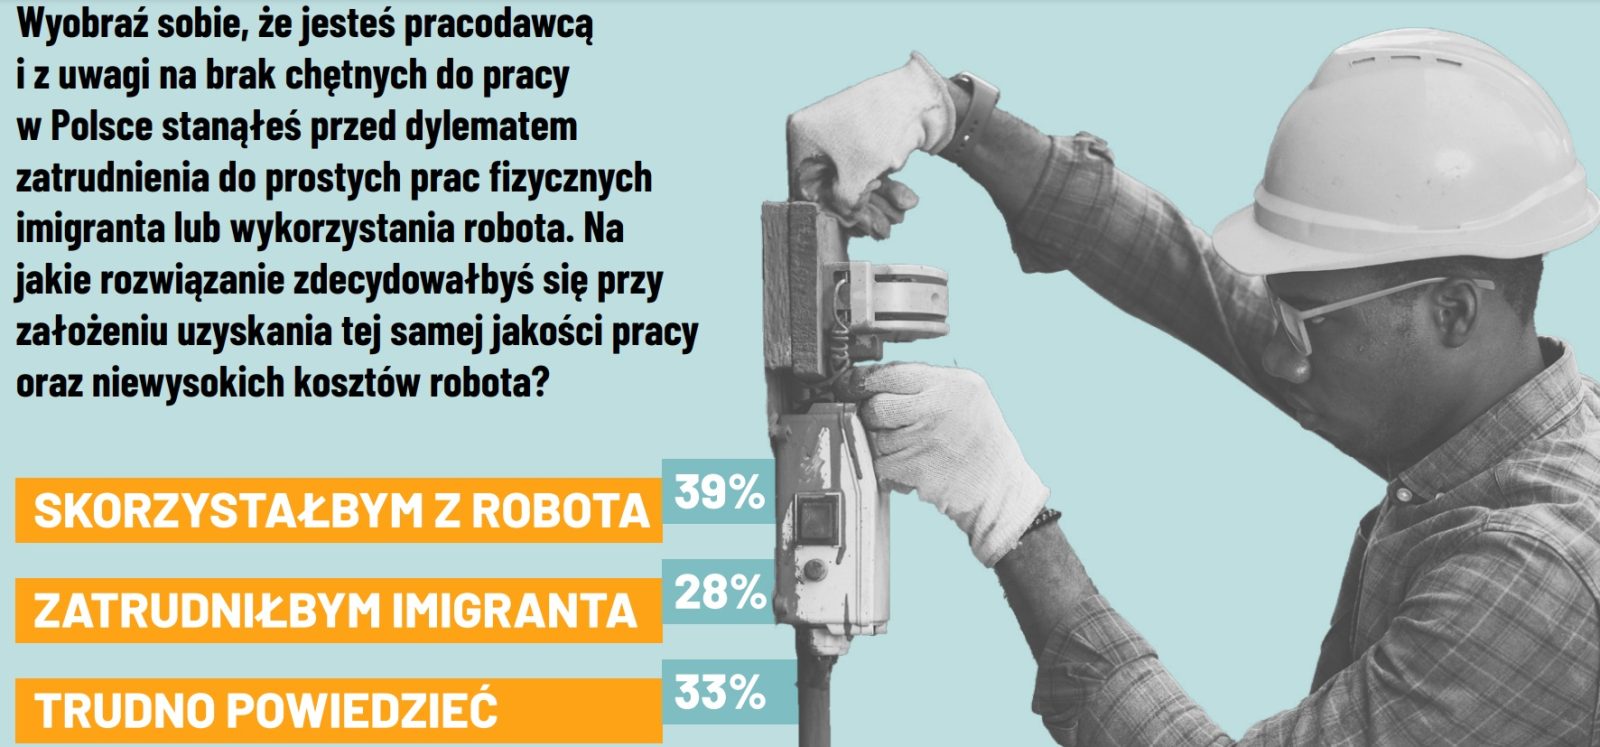 Co Polacy myślą o robotach? (źródło: ideas-ncbr.pl)